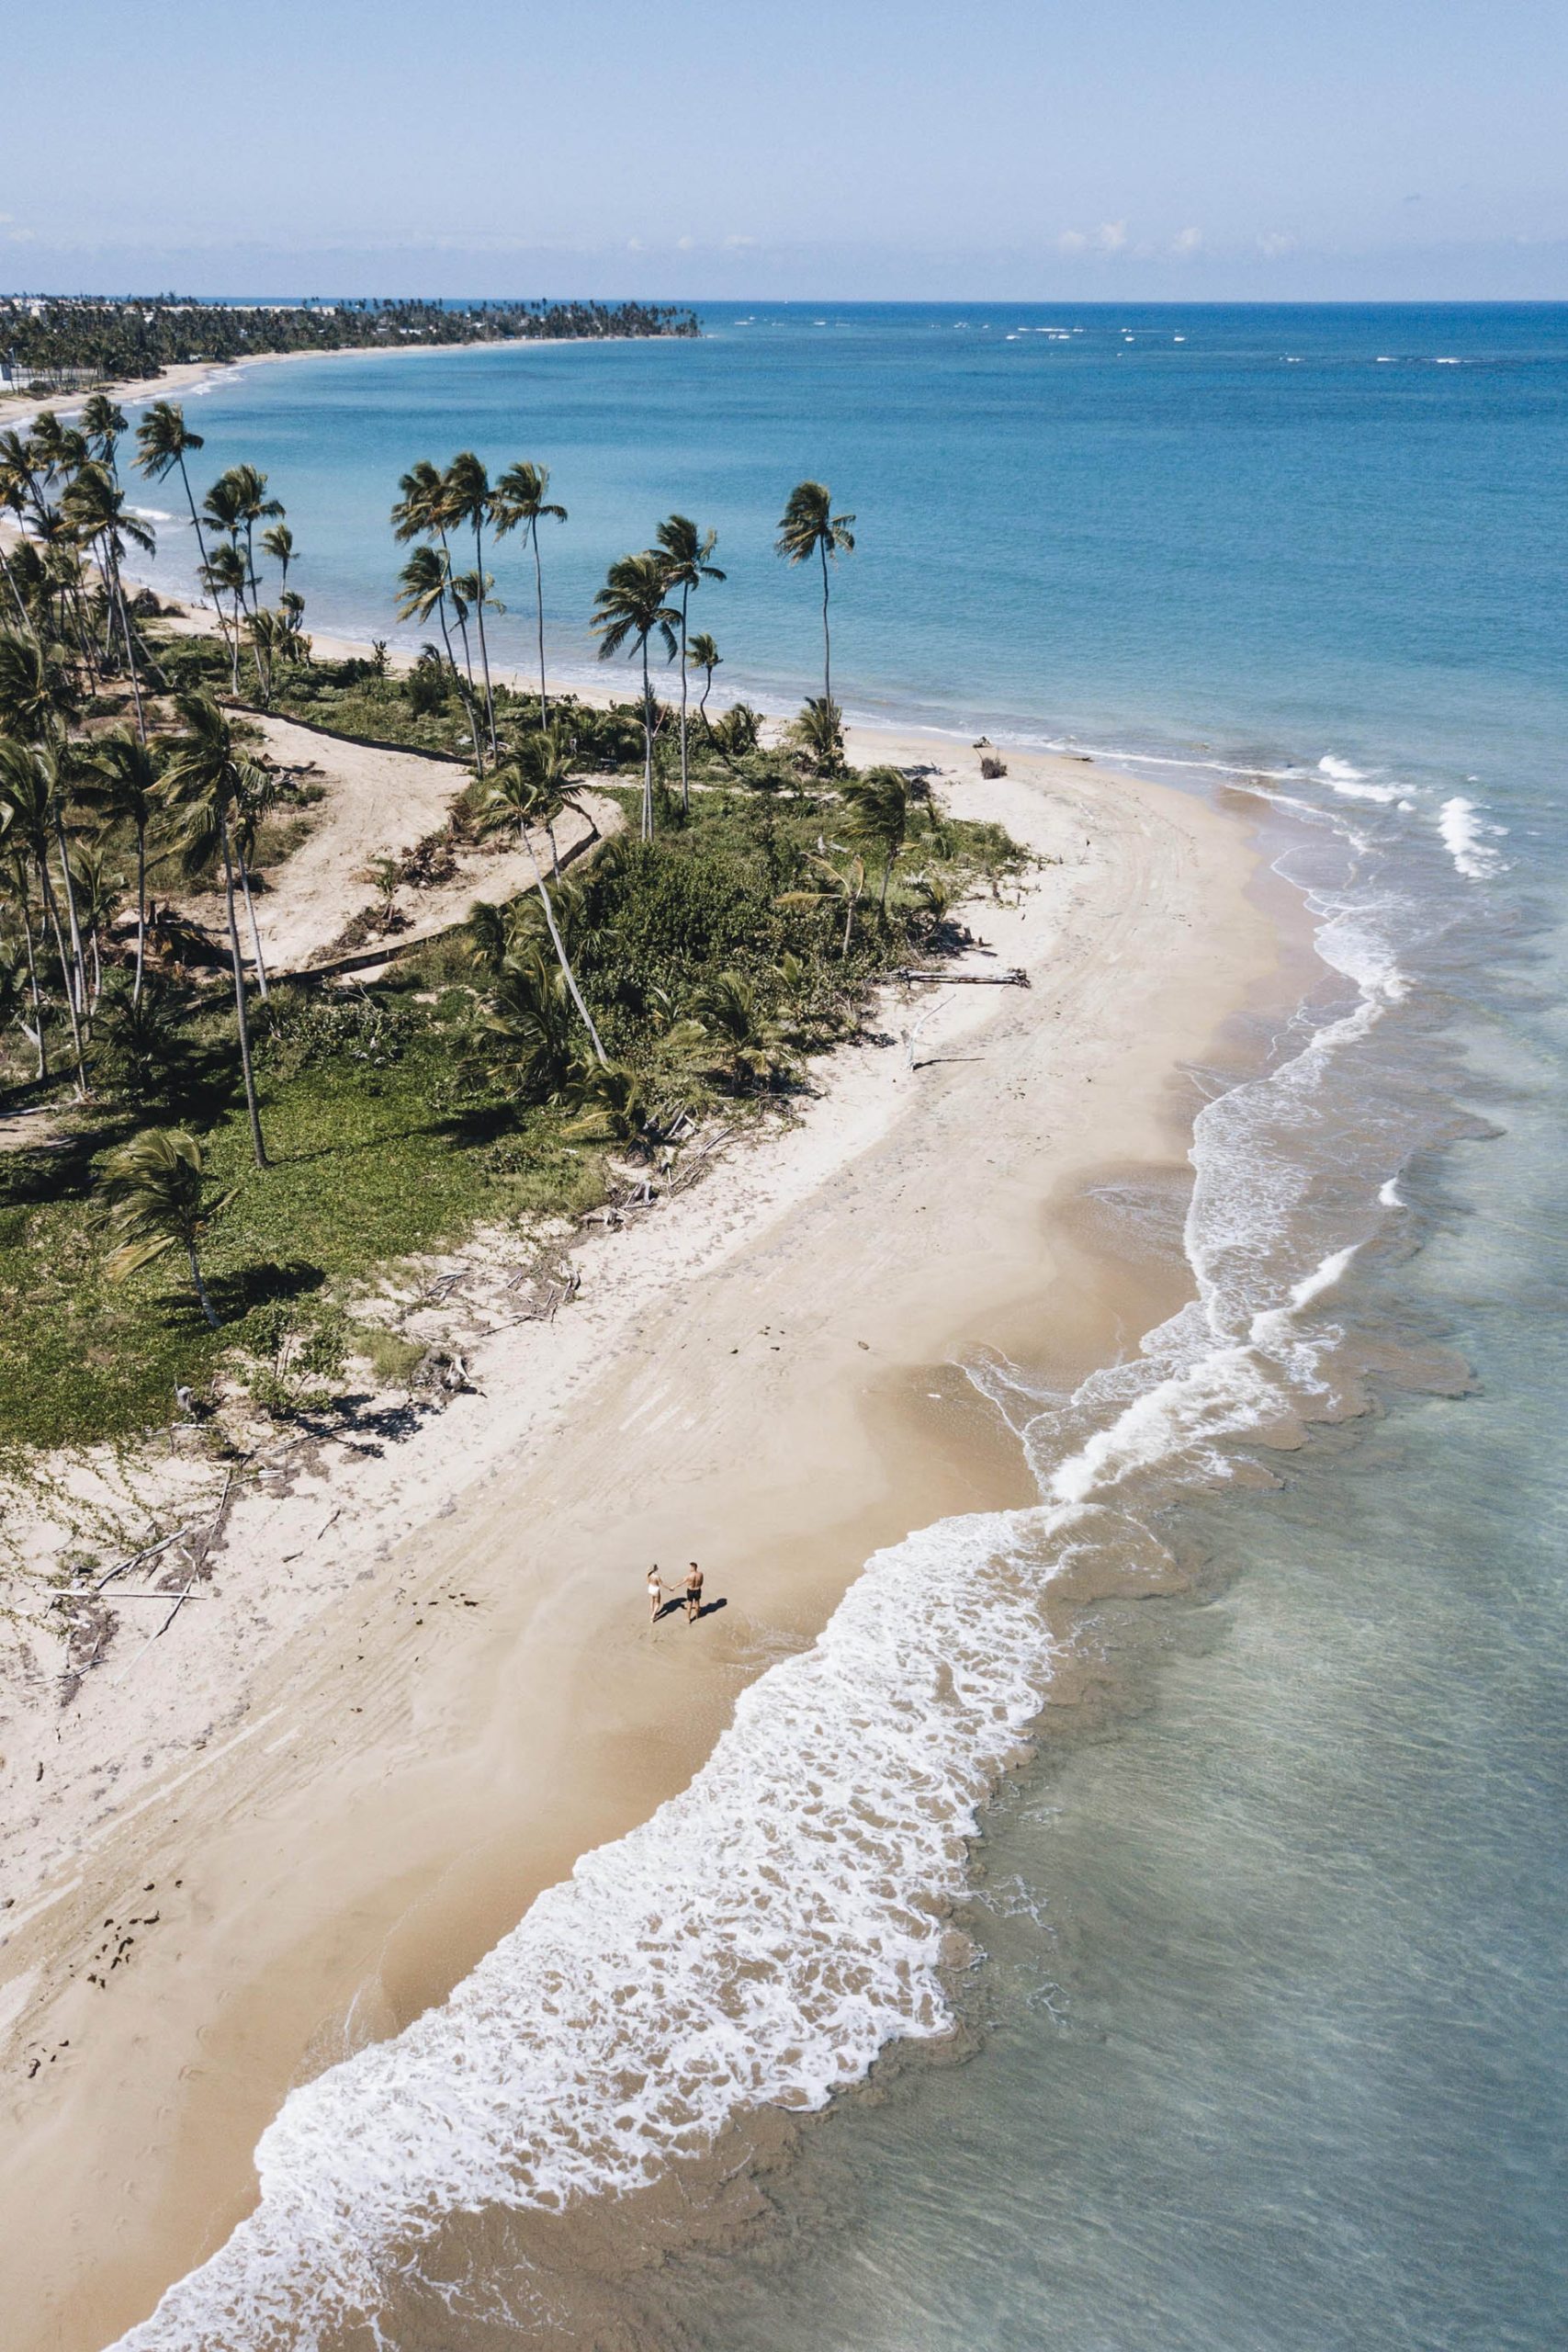 The St. Regis Bahia Beach Resort - Rio Grande, Puerto Rico - Aerial Beach View